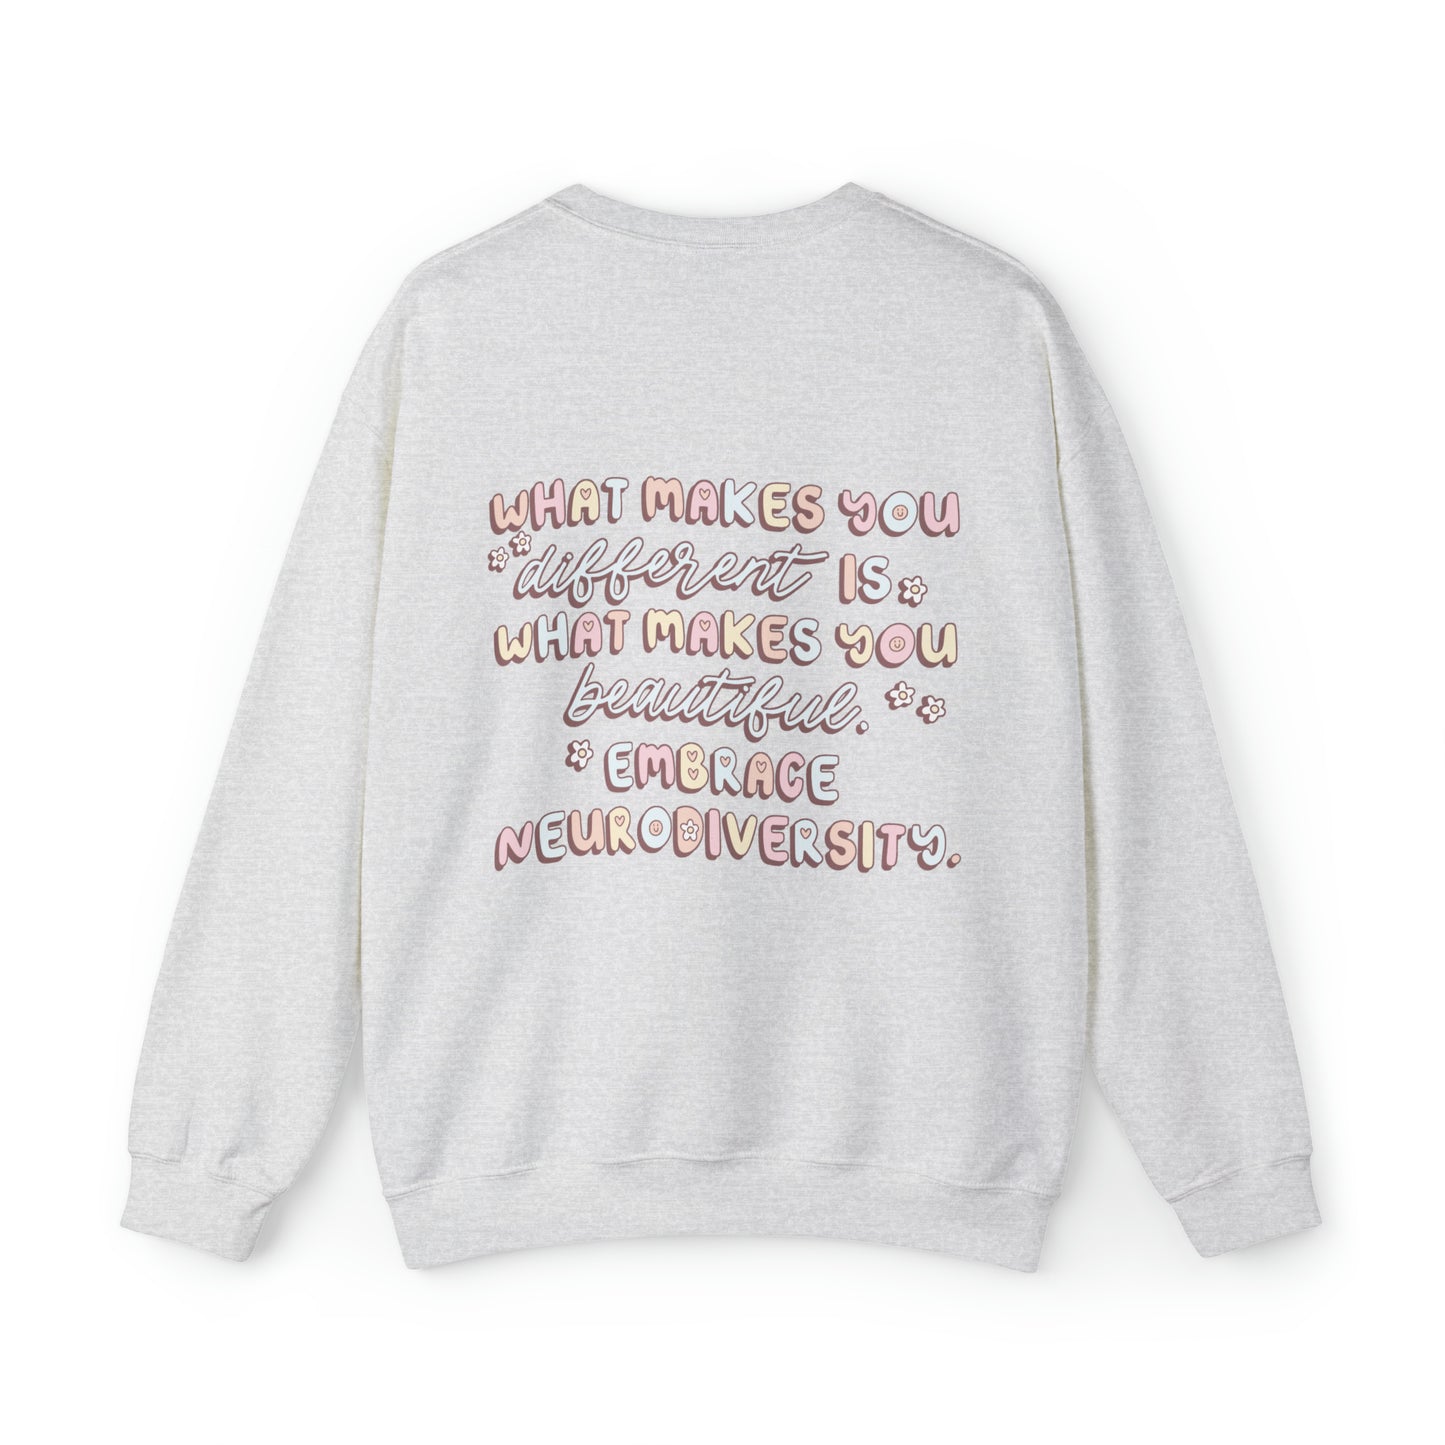 Embrace Neurodiversity Crewneck Sweatshirt | Front and Back Print